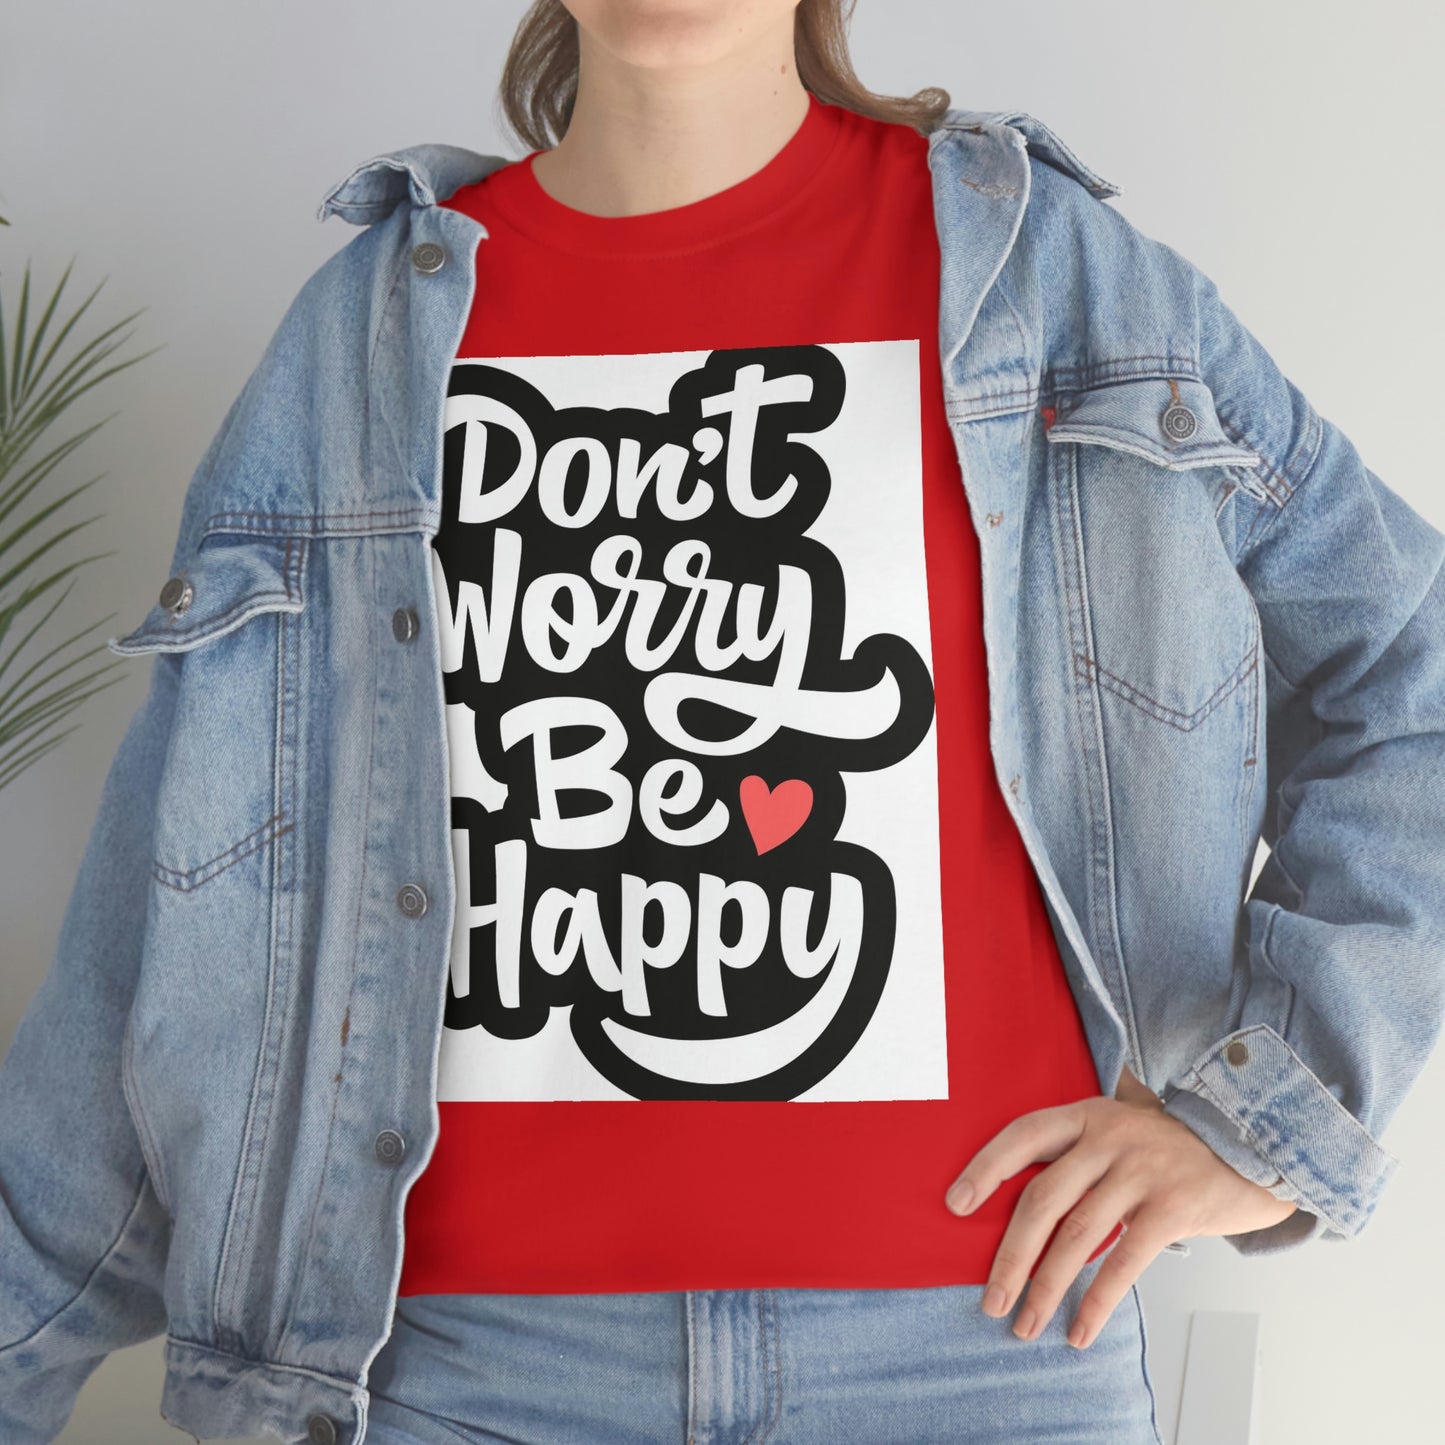 Don’t worry be happy- Heavy Cotton Tee Shirt